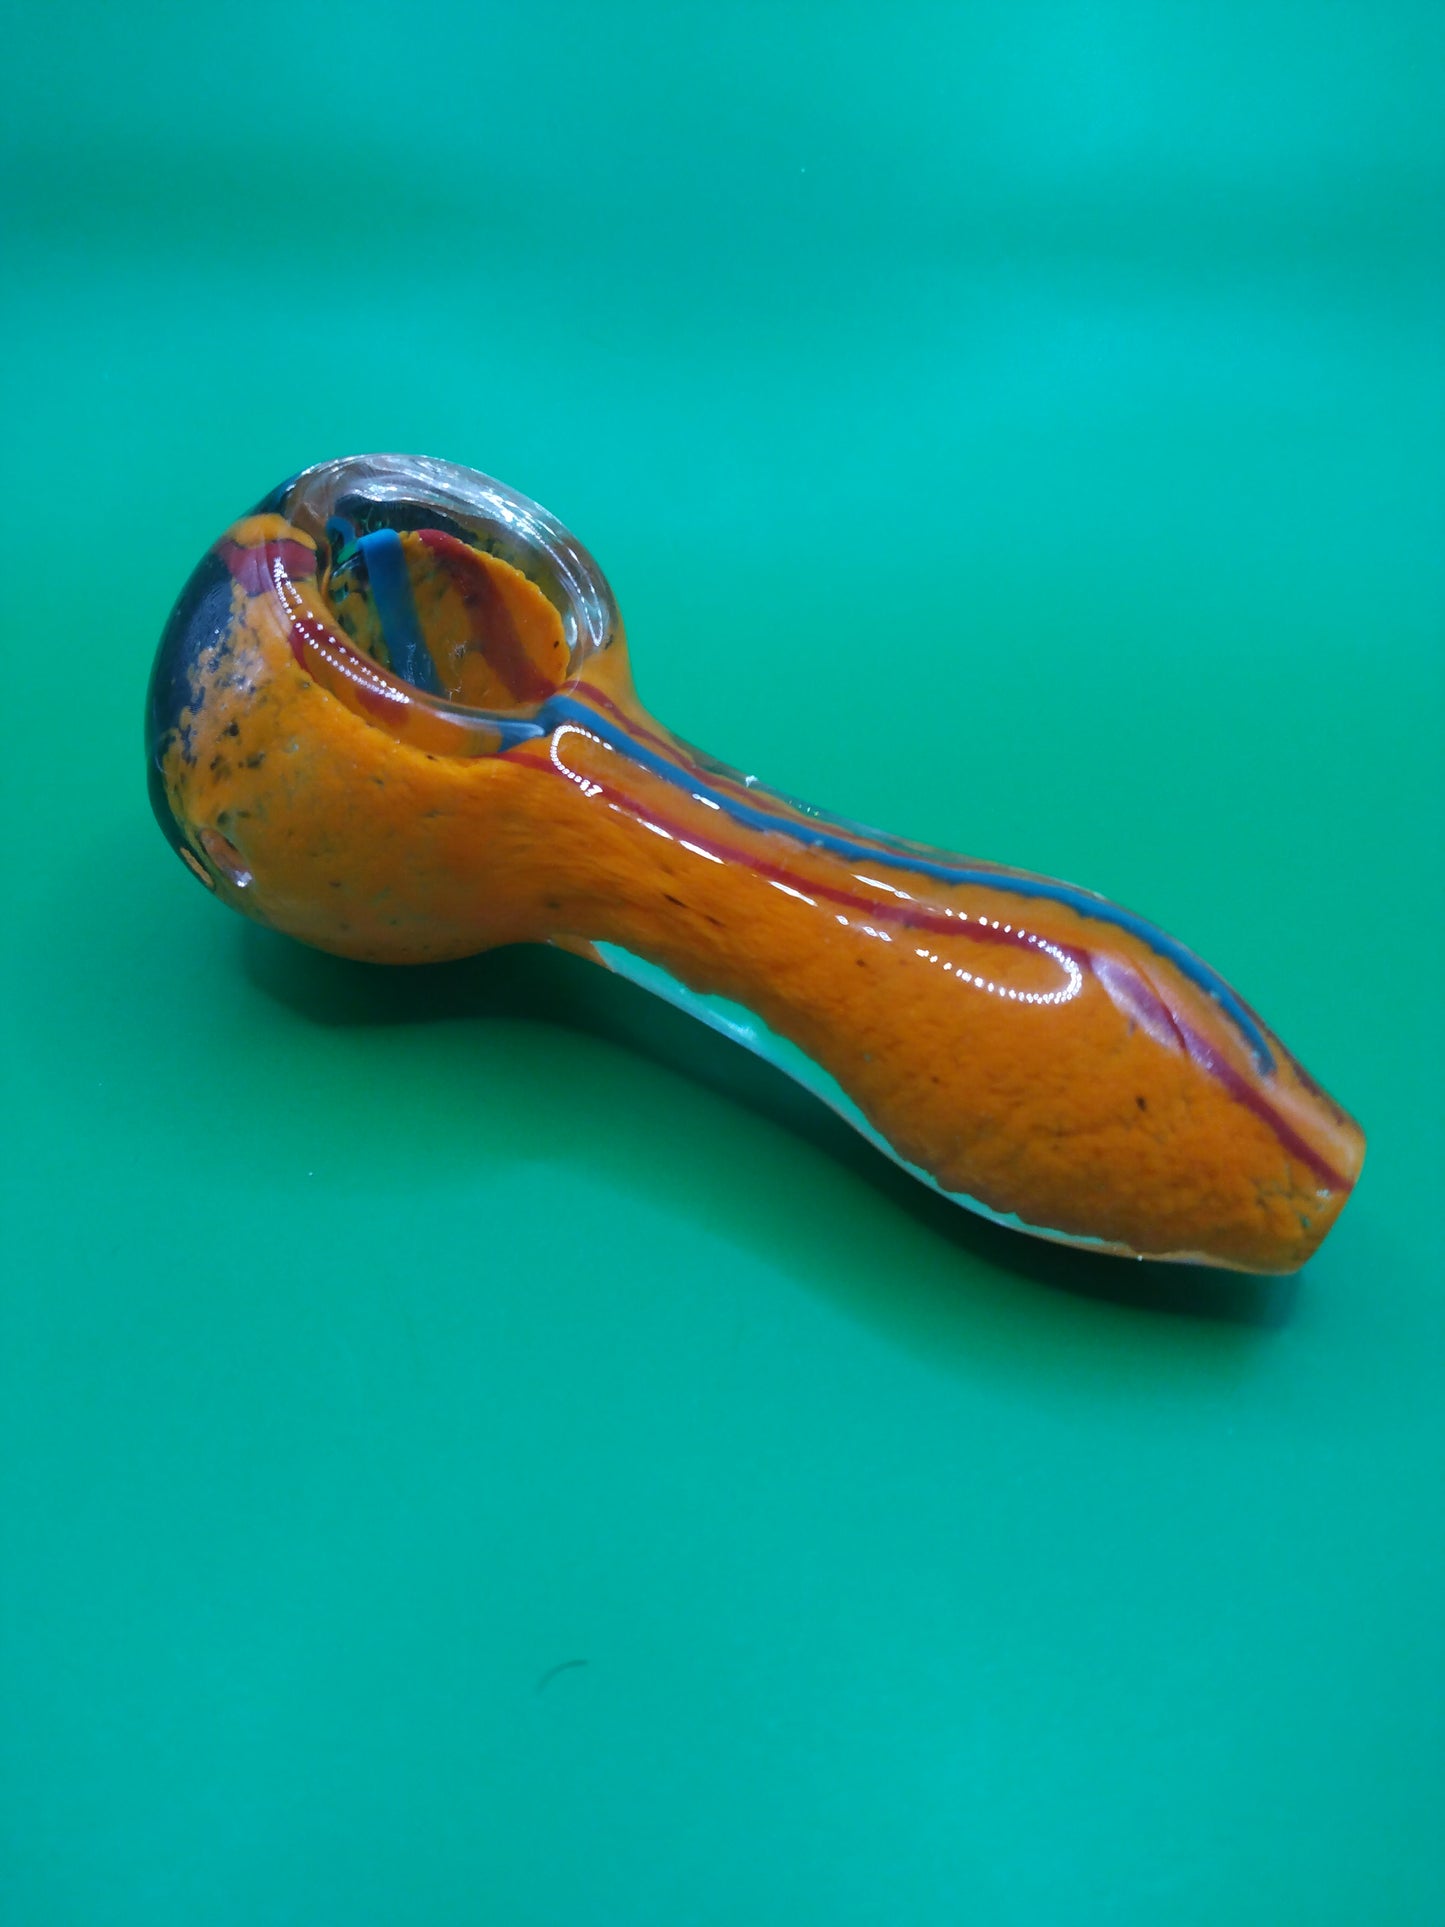 4" Orange, Blue, & Maroon, Striped, Glass Hand Pipe (Spoon)